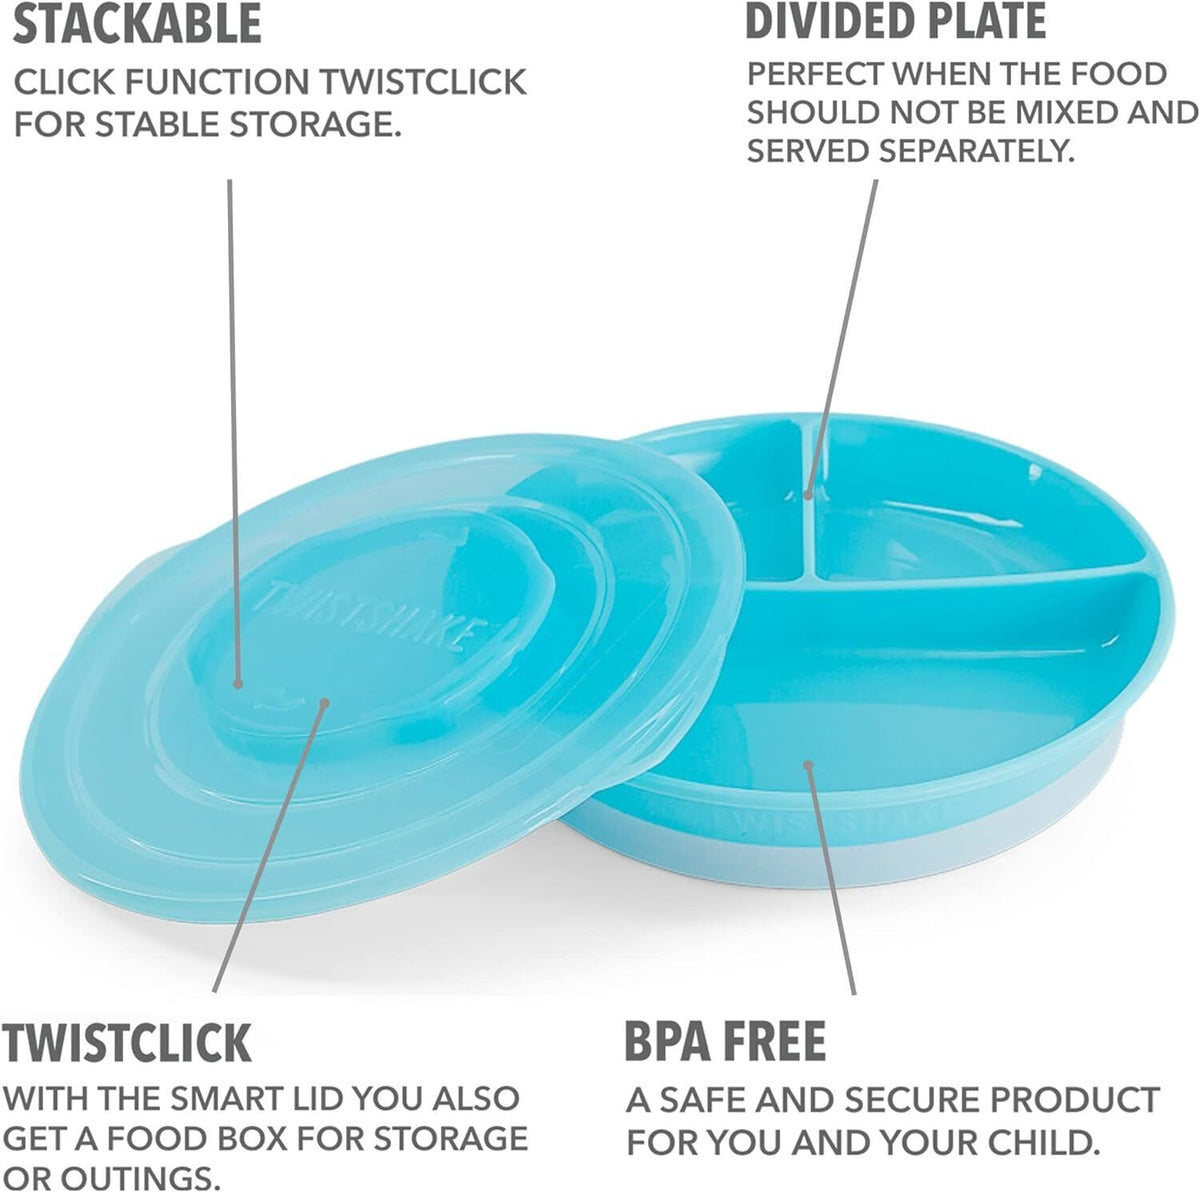 Divided Plate Twistshake